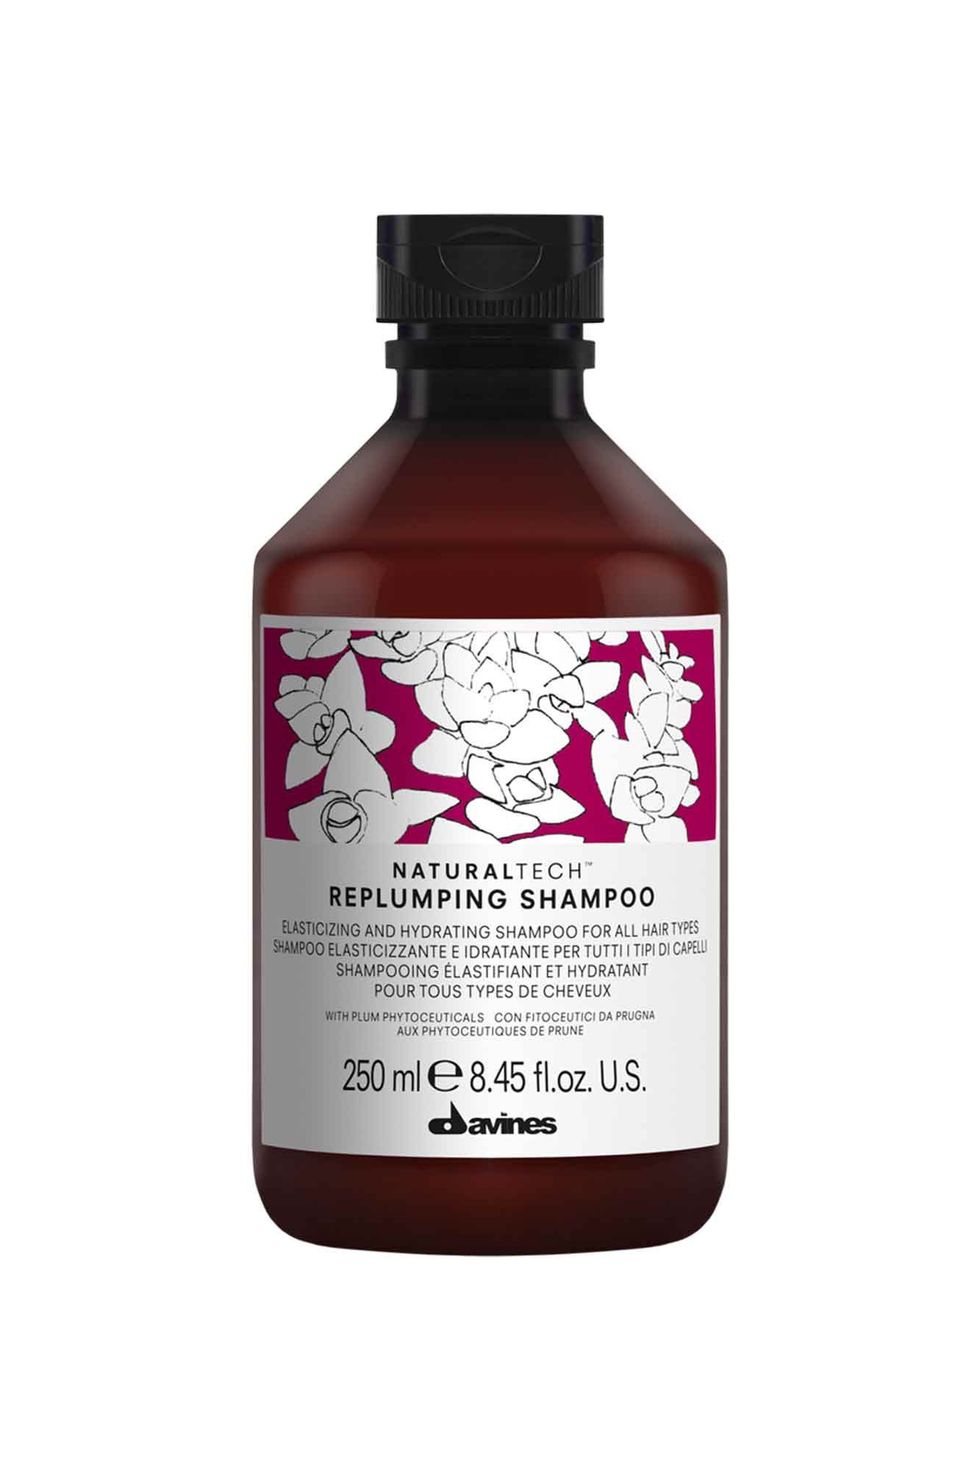 Davines Natural Tech Replumping Shampoo 250 Ml 8.45 Oz by Shampoo & Conditioner